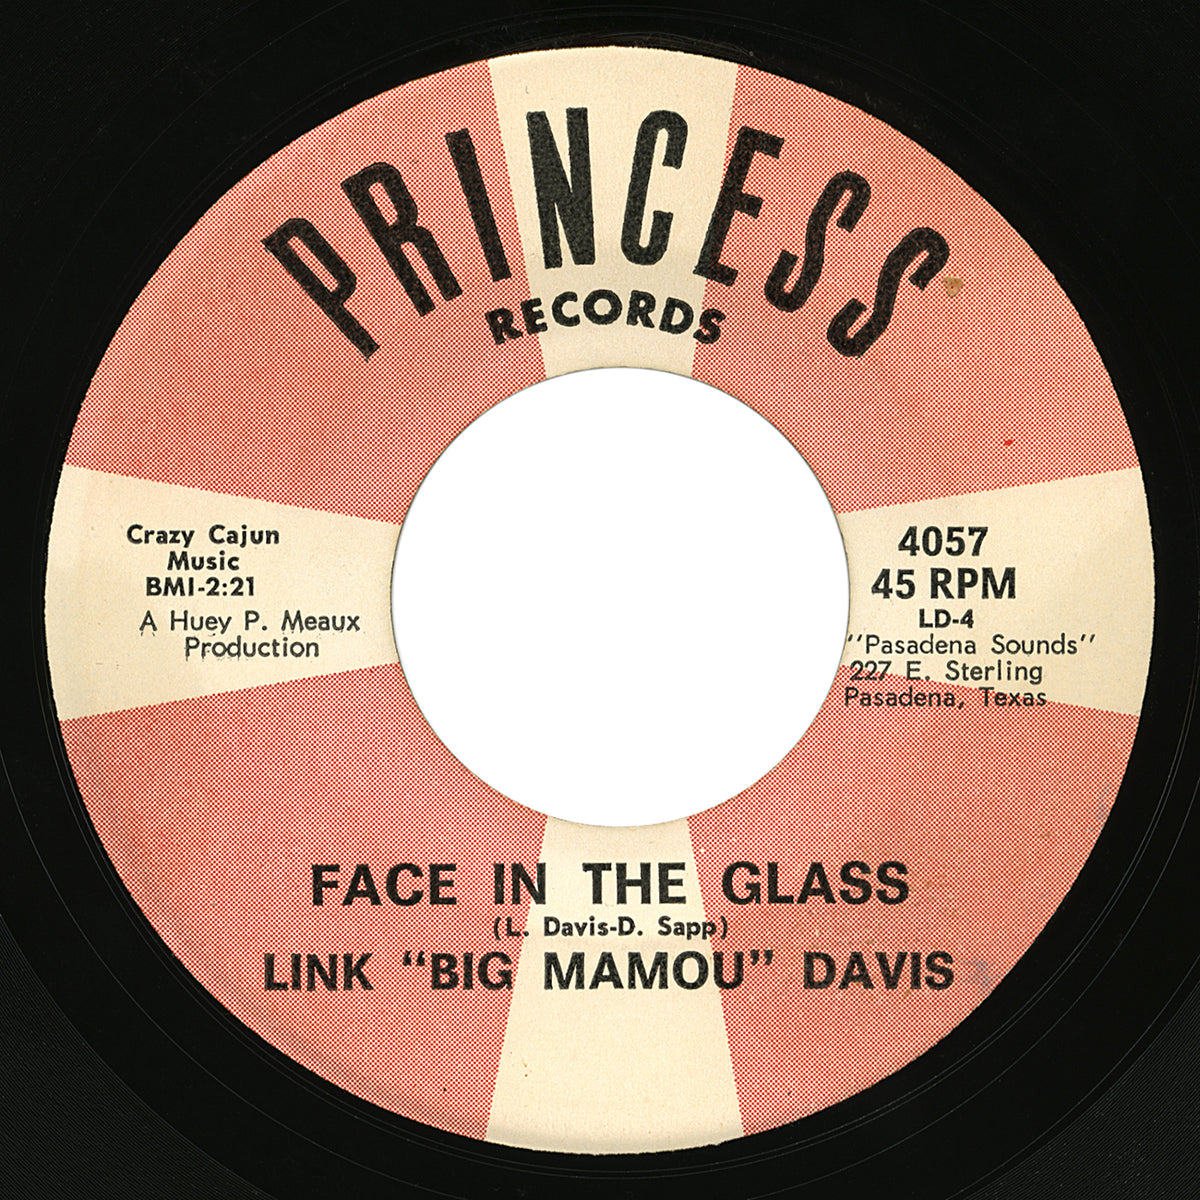 Link “Big Mamou” Davis – Face In The Glass – Princess